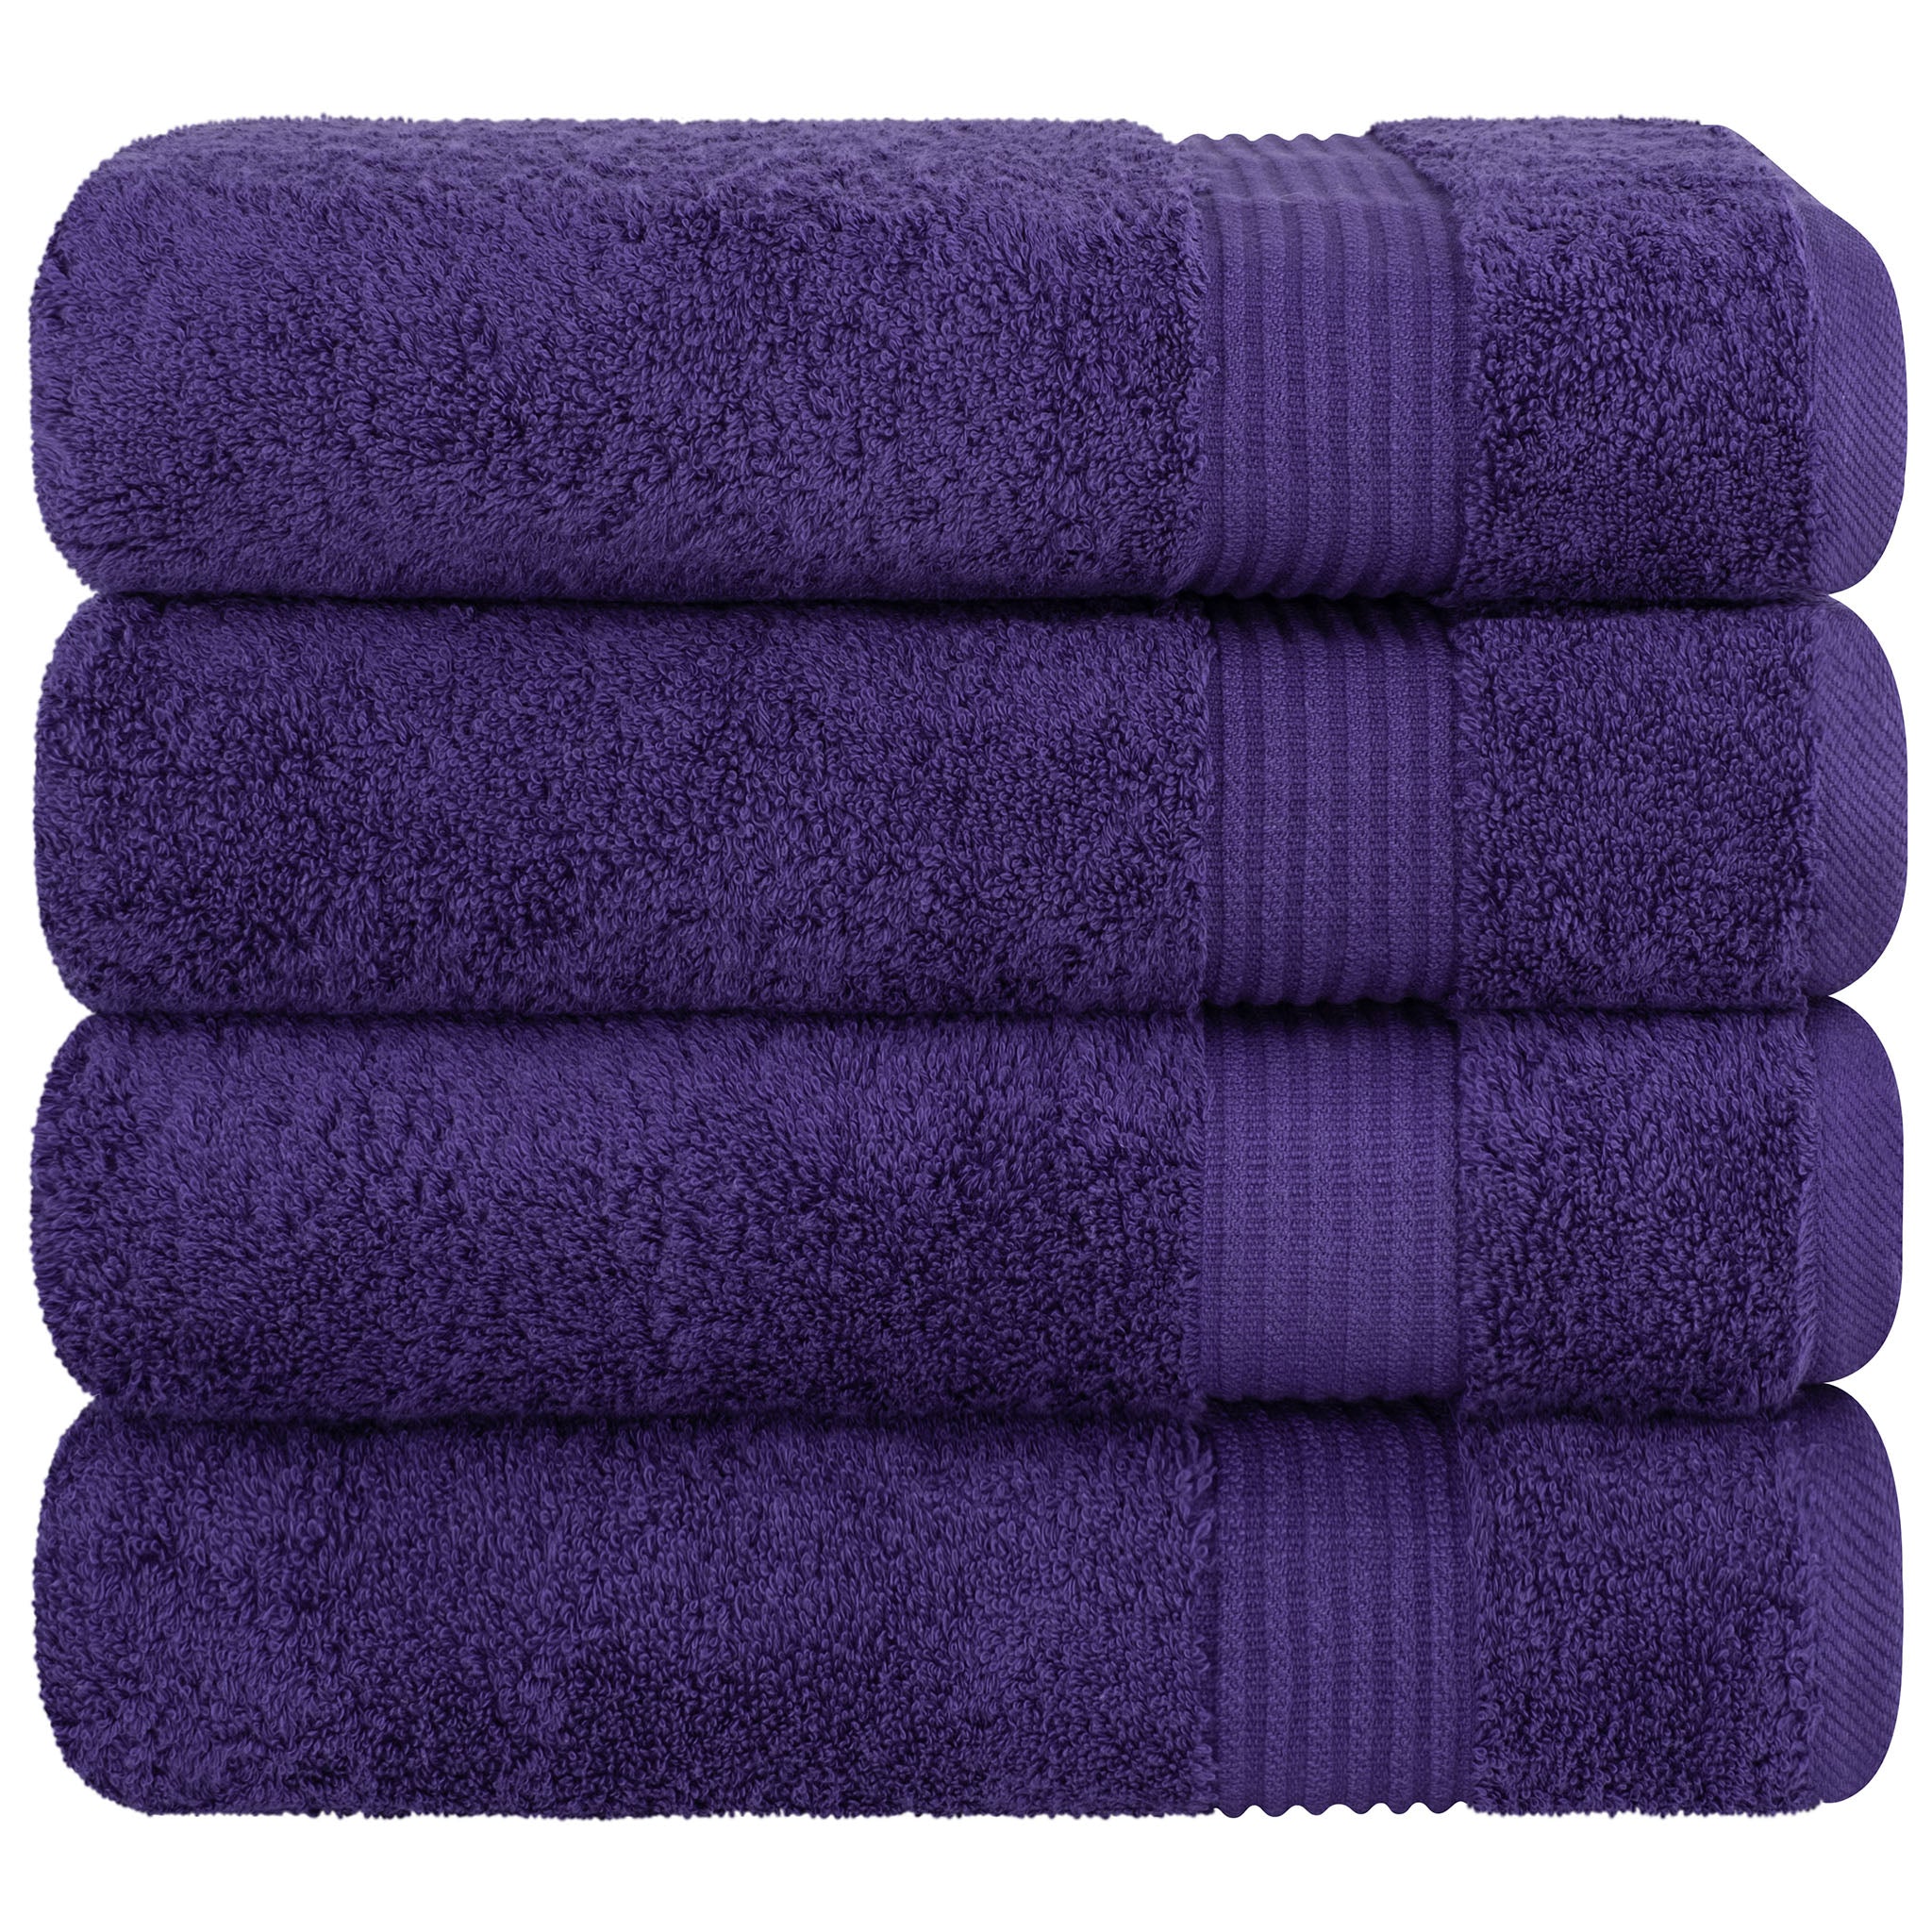 American Soft Linen Bekos 100% Cotton Turkish Towels, 4 Piece Bath Towel Set -purple-06